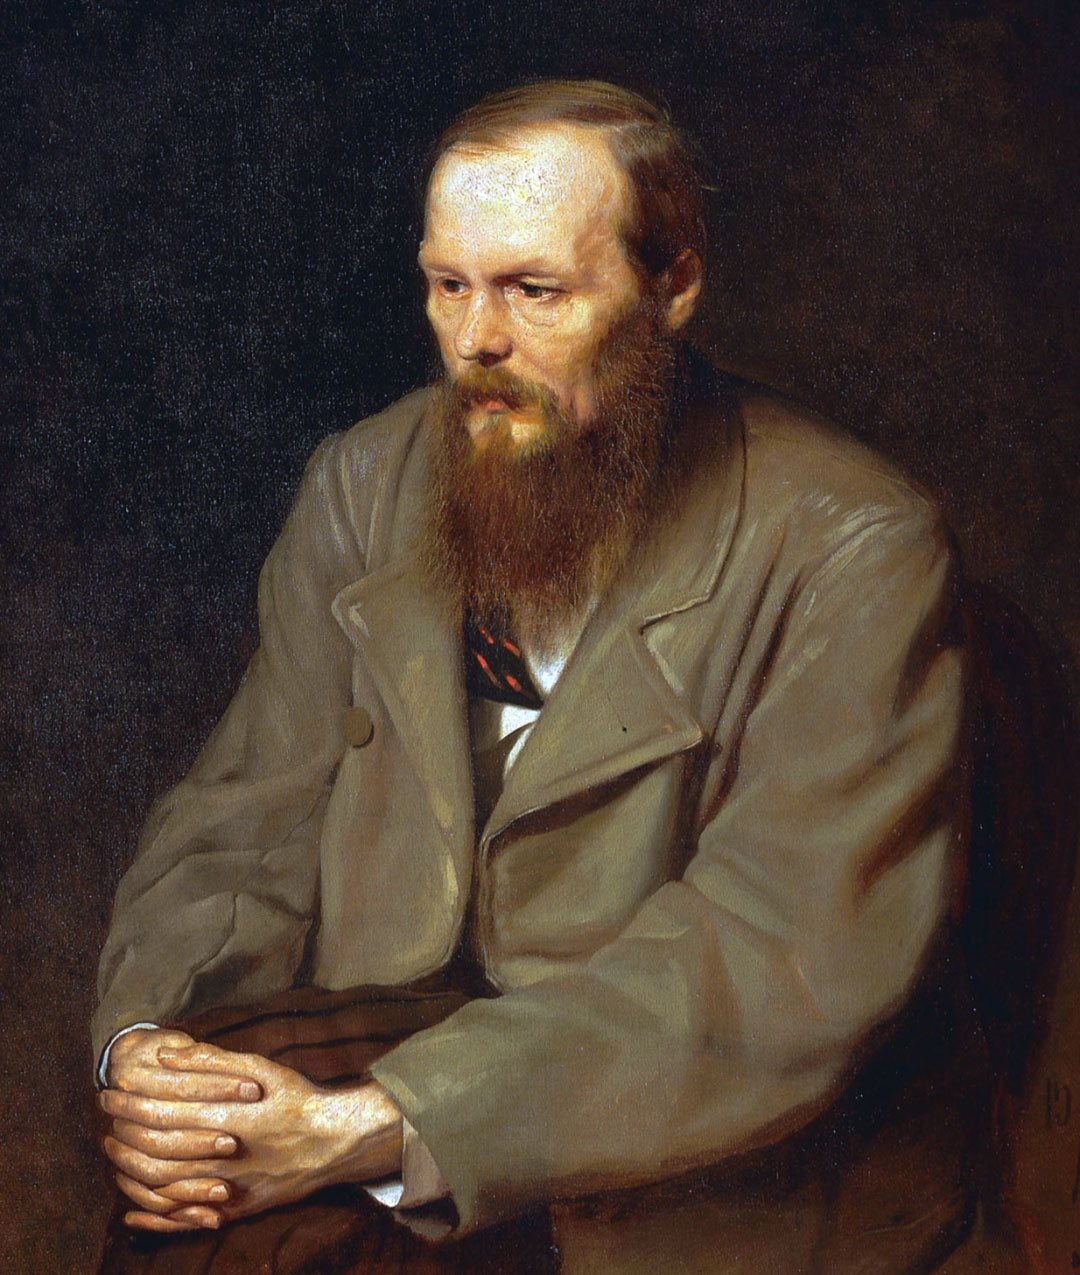  Fjodor Dostojevskij, životopis: historie, život a dílo